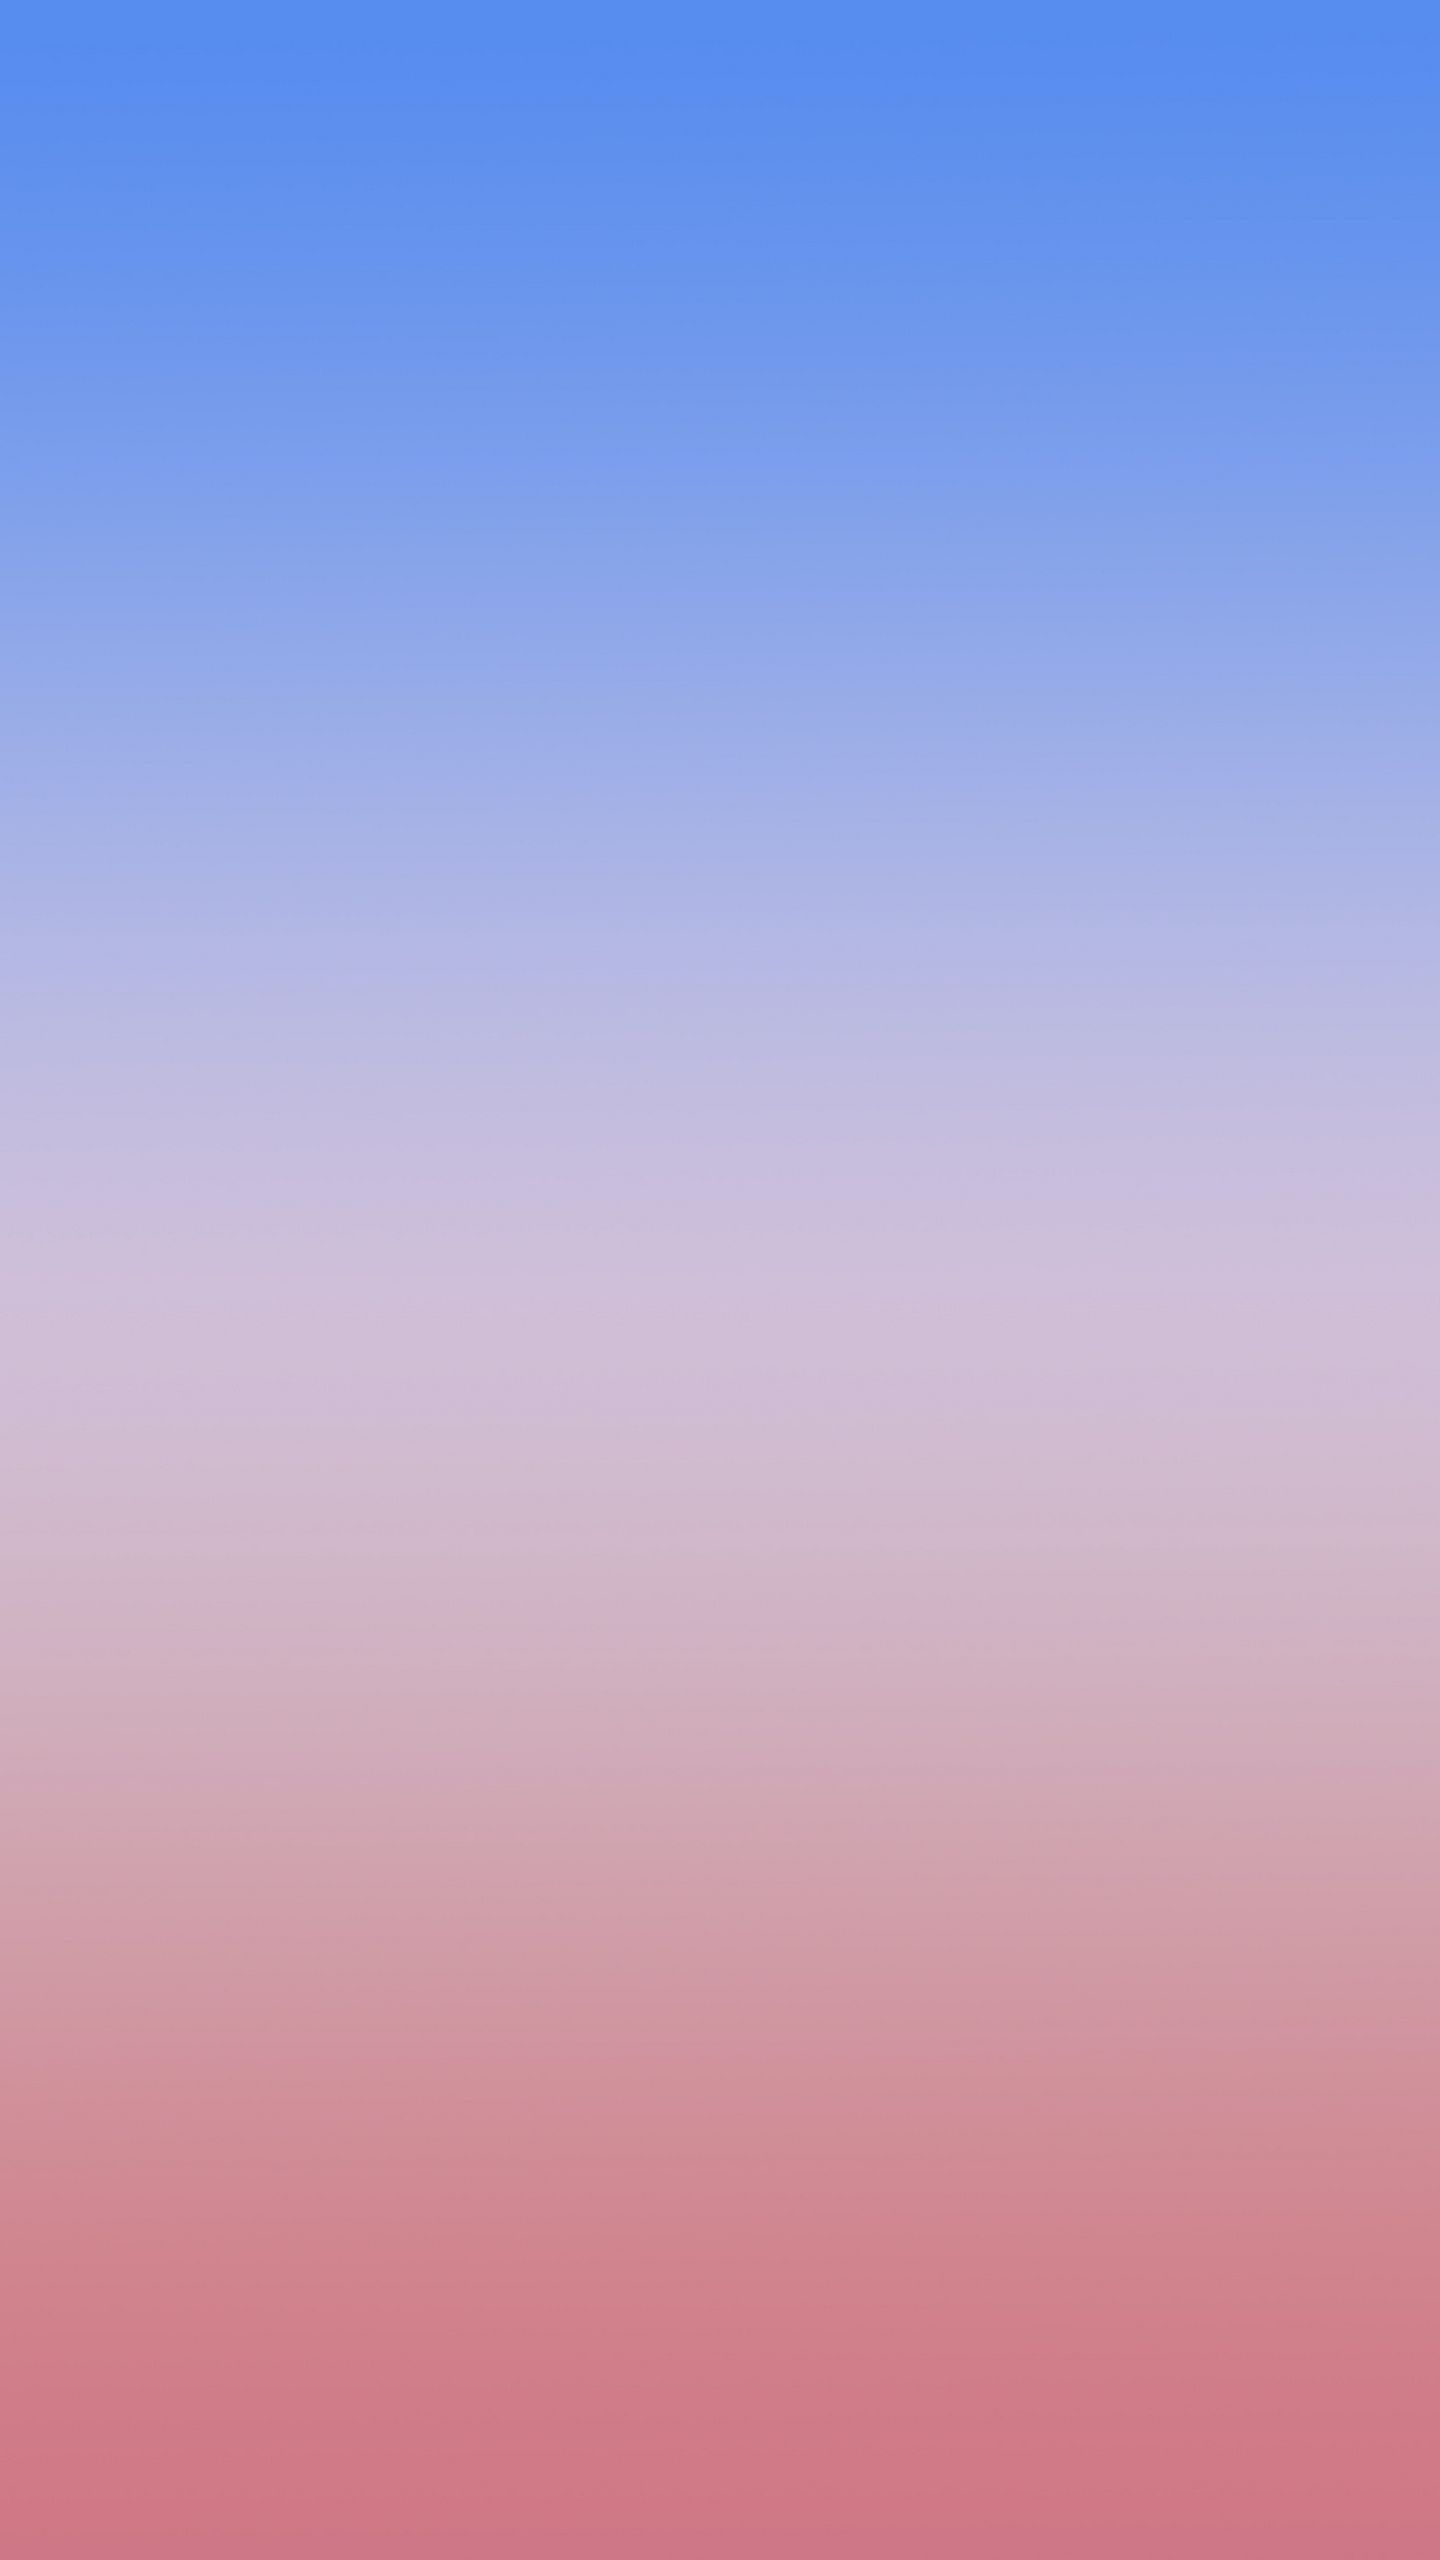 Download wallpaper 1440x2560 gradient, blue, pink, sky qhd samsung galaxy  s6, s7, edge, note, lg g4 hd background